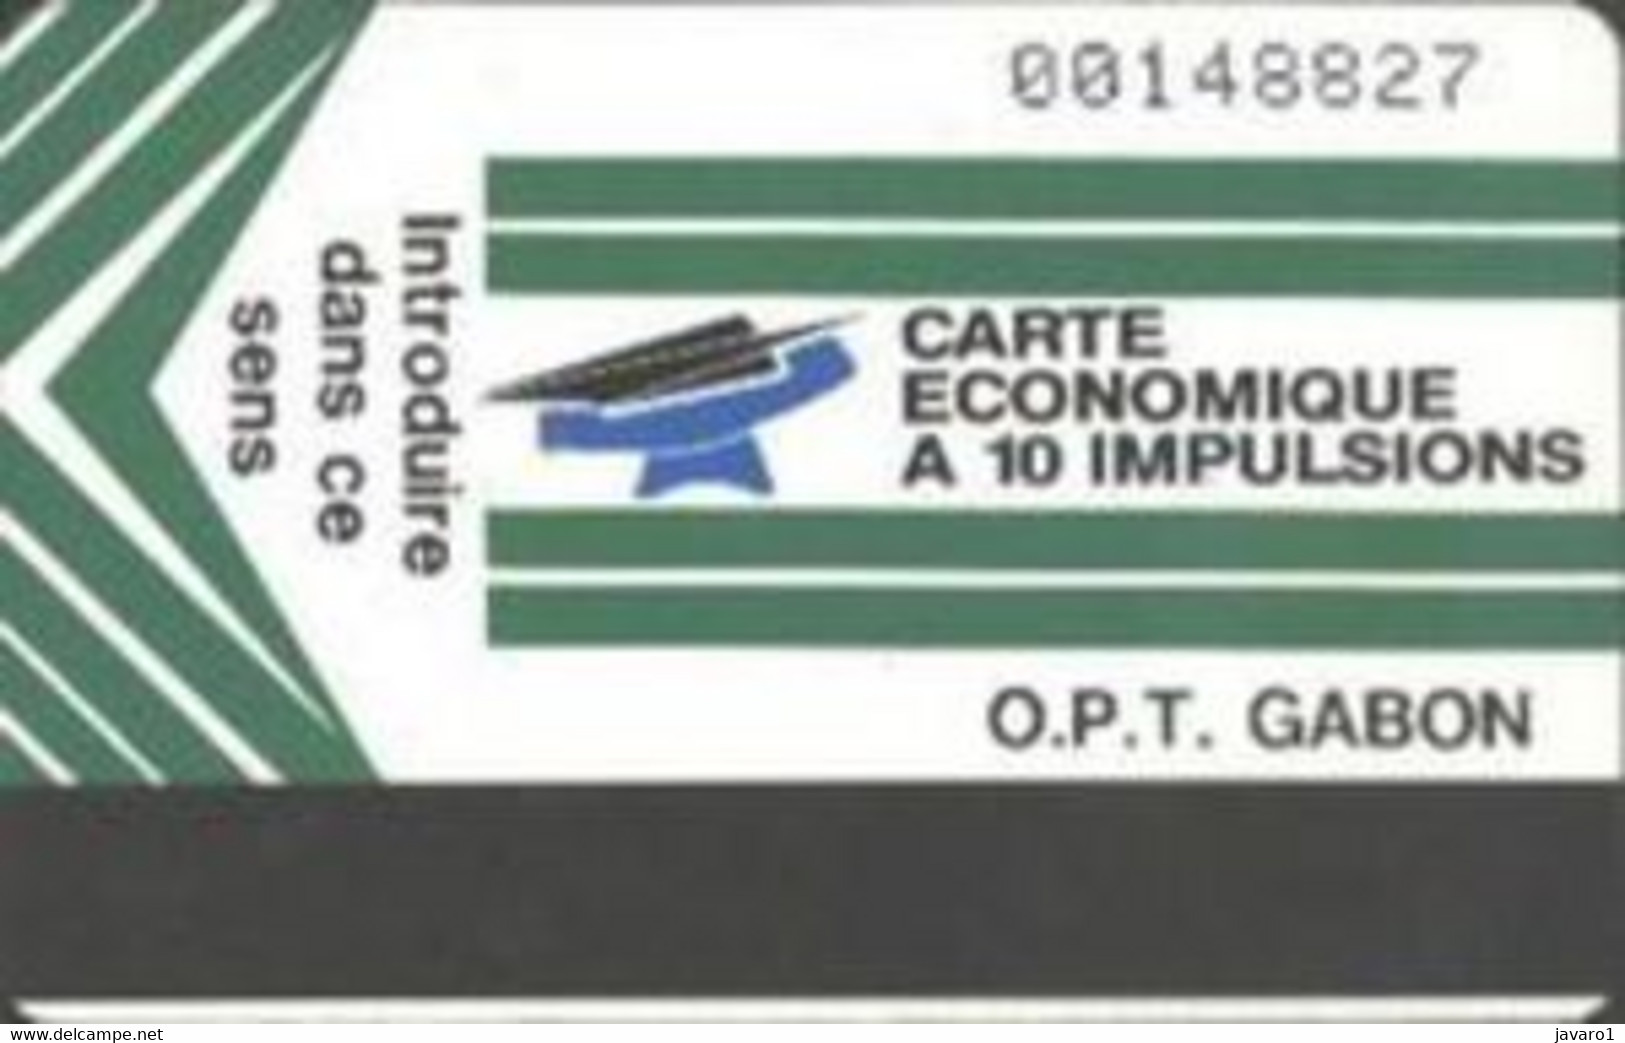 GABON : GAB10 10 Imp. (Avec Un Compte CCP..) USED - Gabon